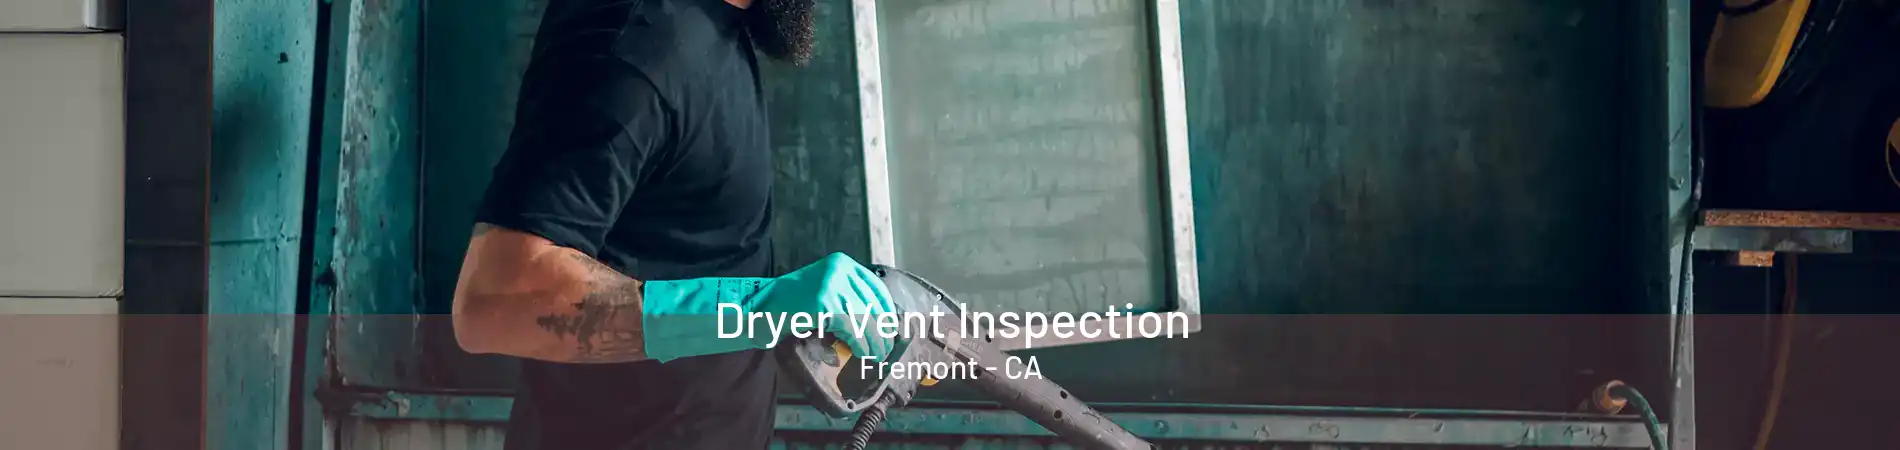 Dryer Vent Inspection Fremont - CA